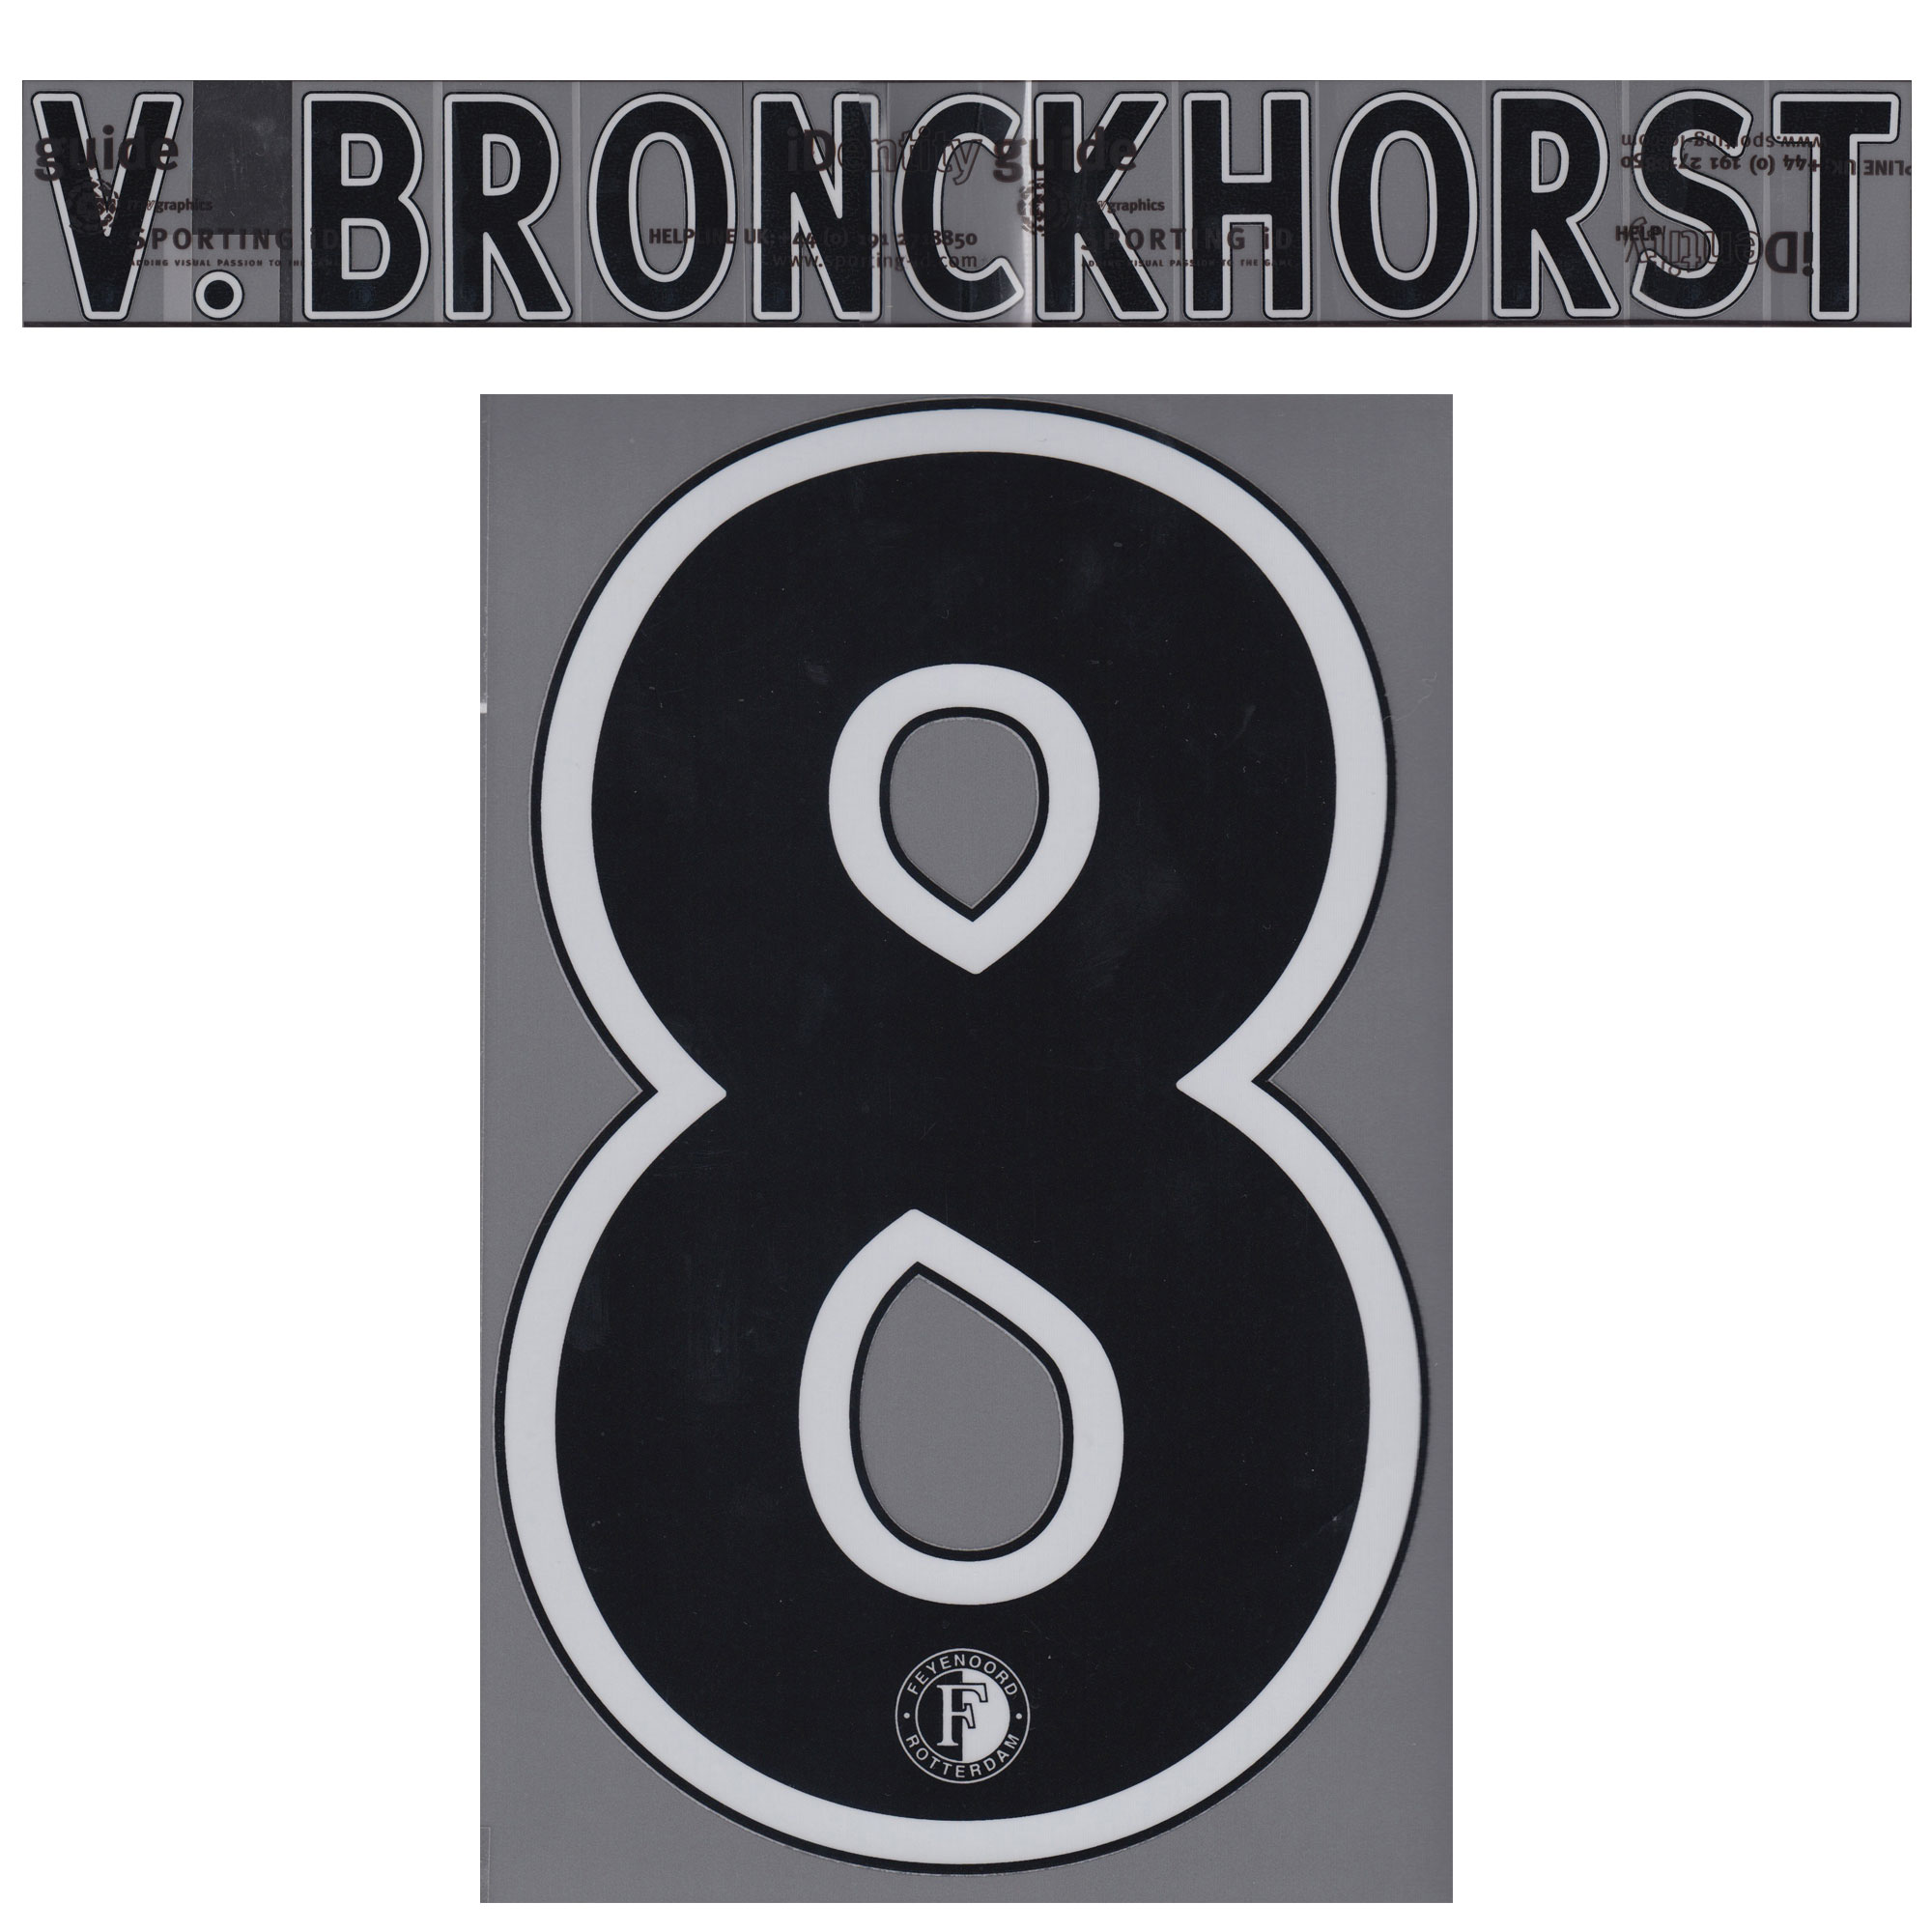 V. Bronckhorst 8 (Feyenoord Bedrukking 2007-2008)